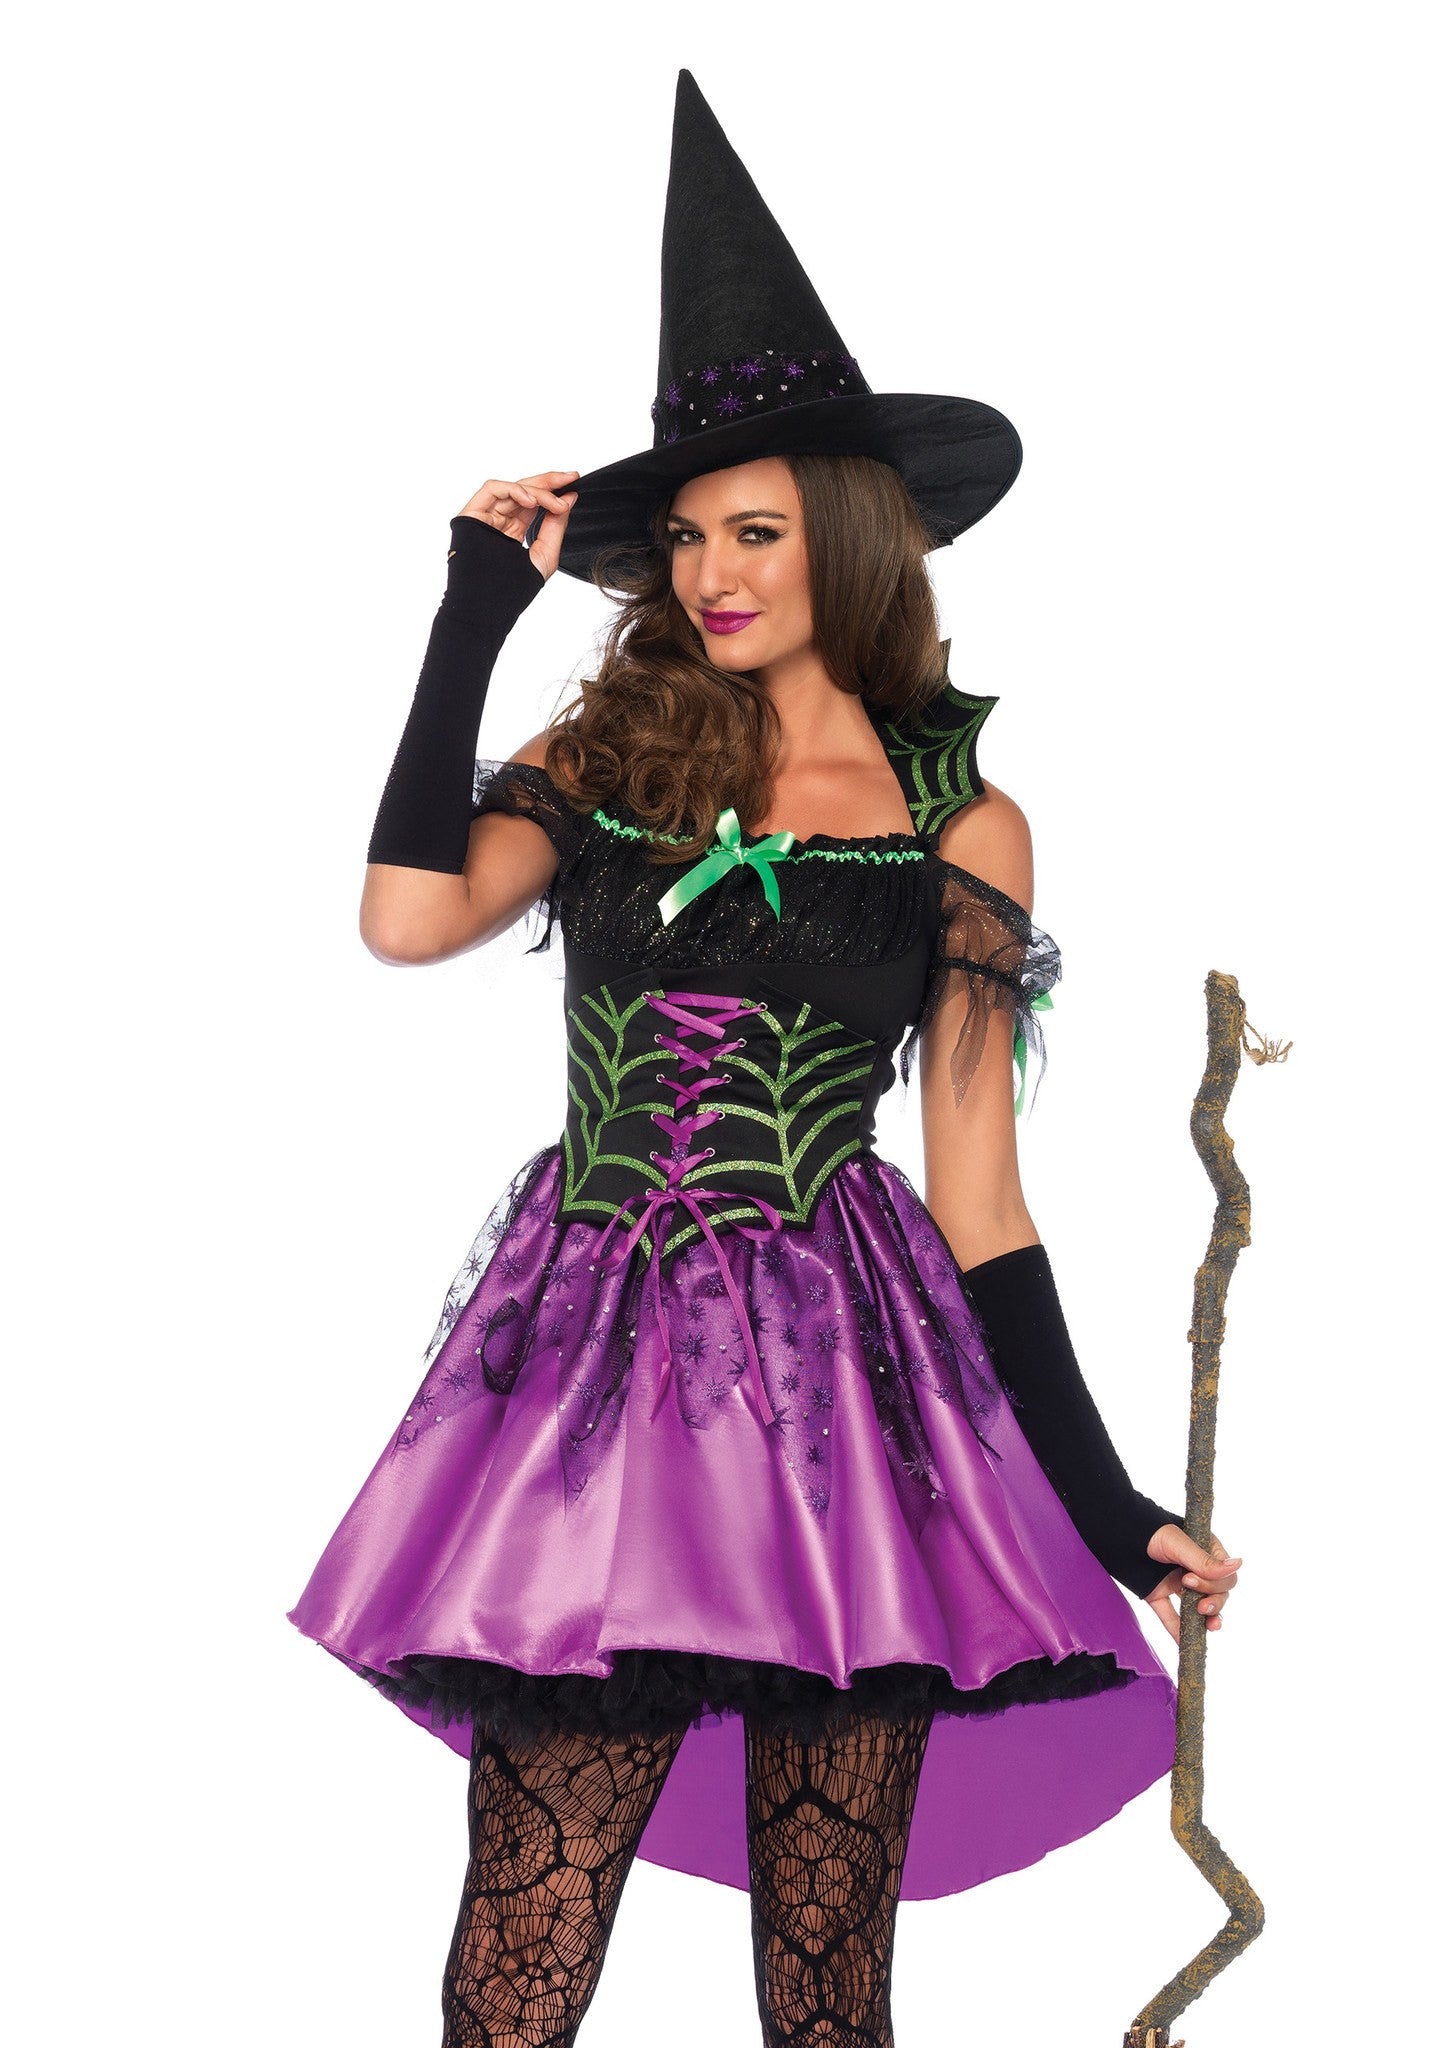 Costume - Spiderweb Witch Costume